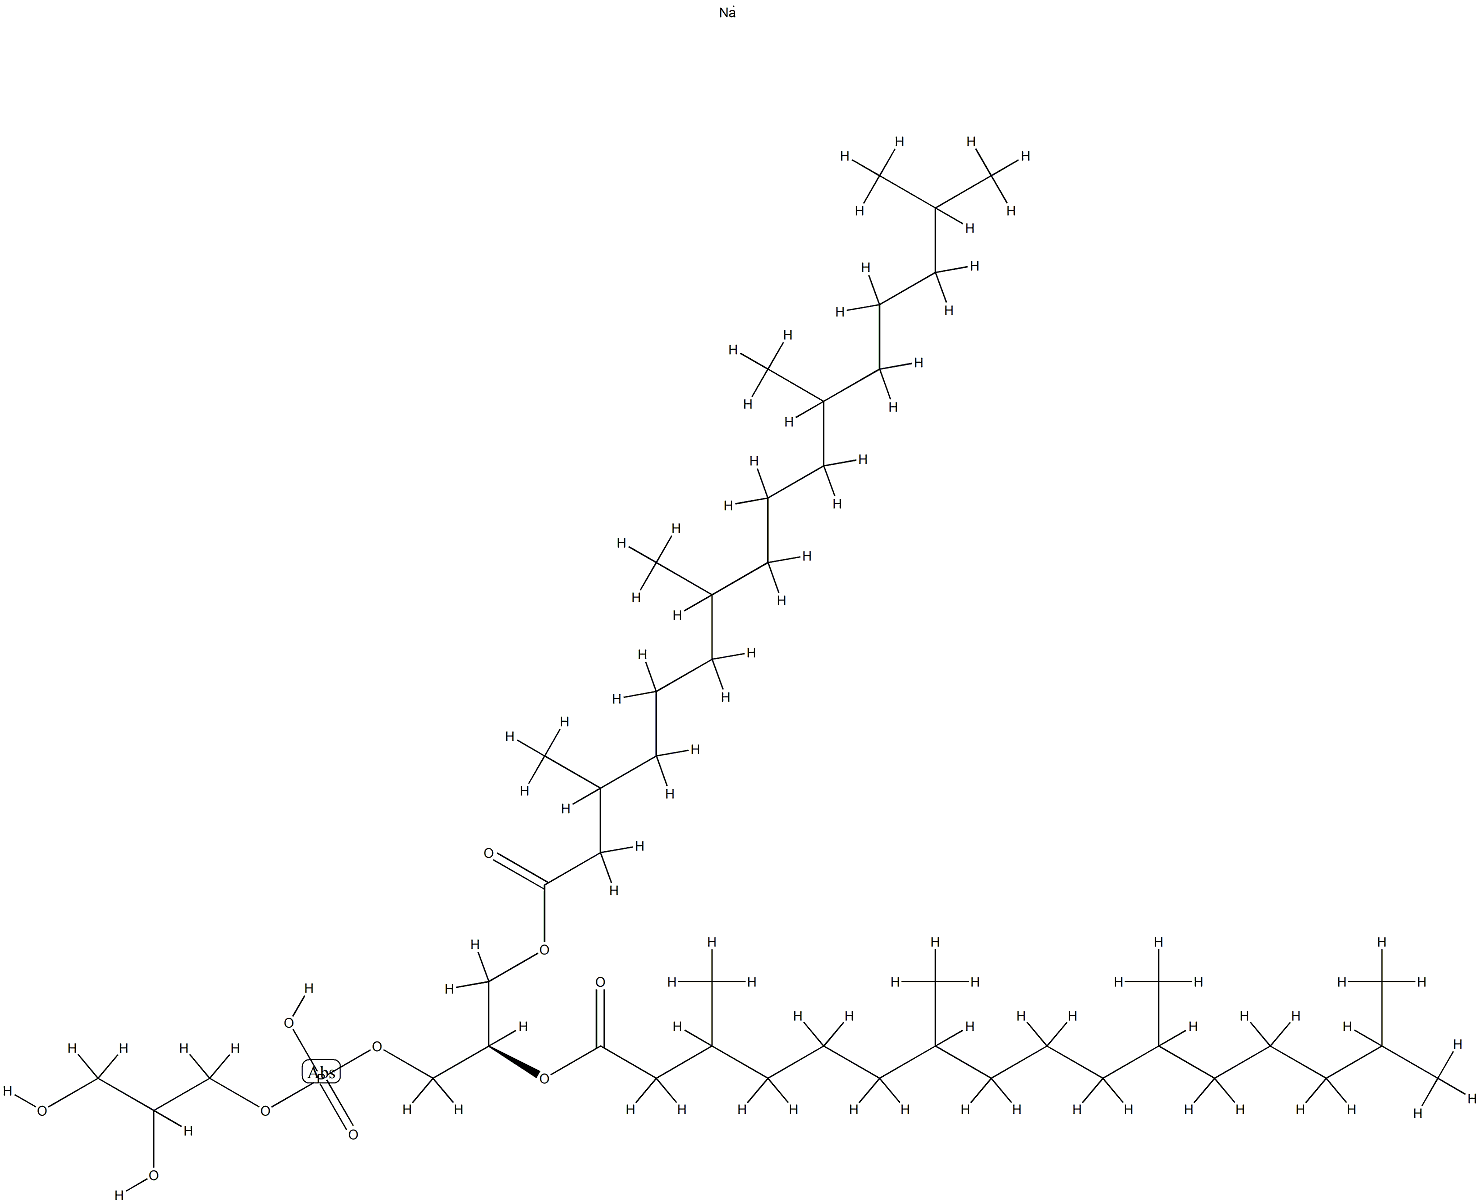 1,2-diphytanoyl-sn-glycero-3-phospho-(1'-rac-glycerol) (sodiuM salt) Struktur